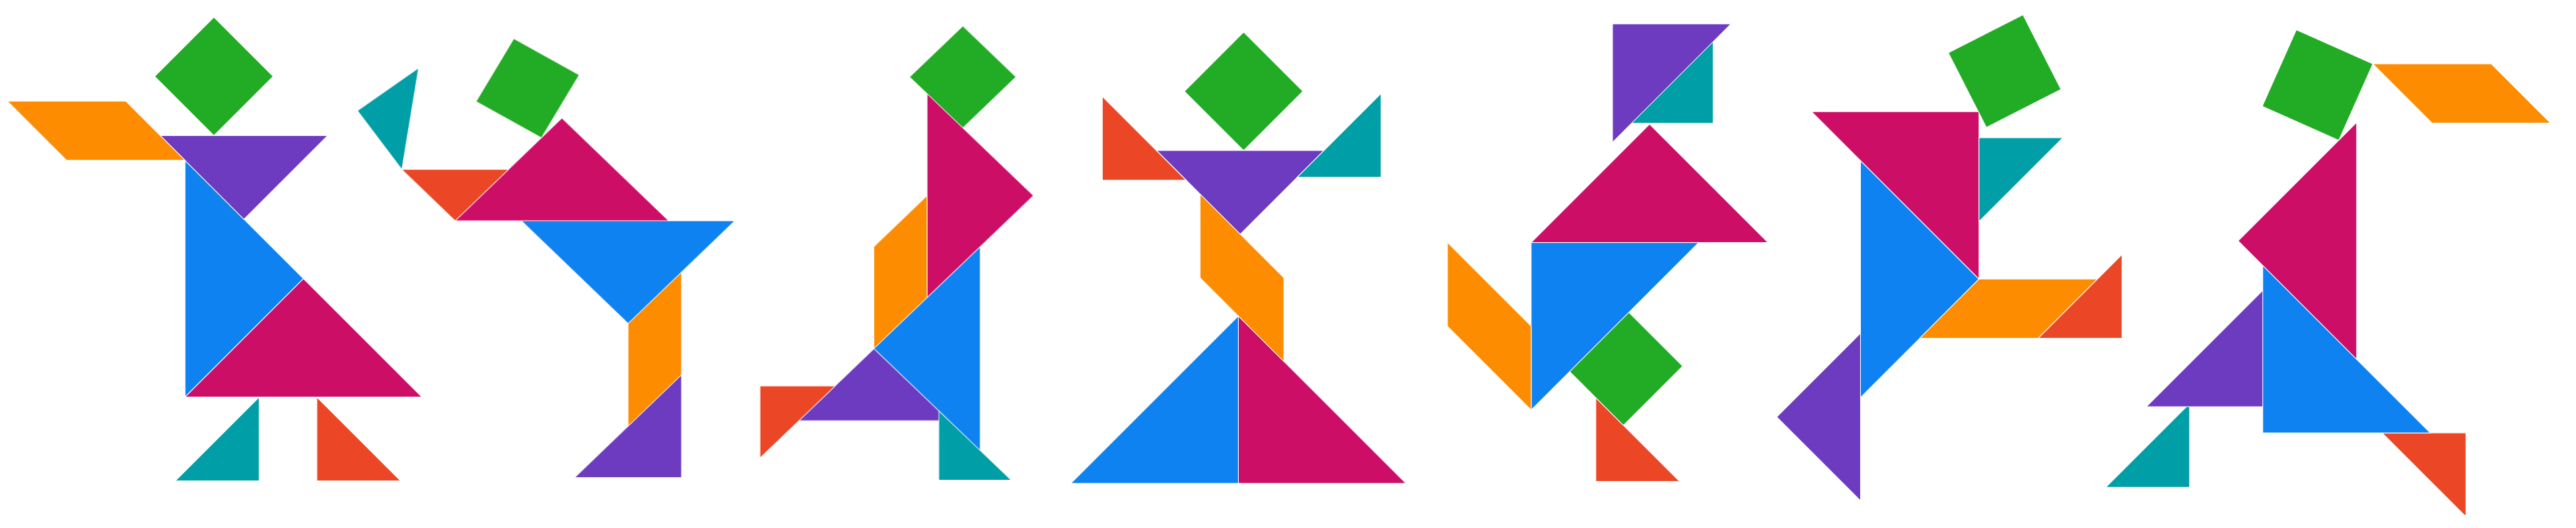 The tangram puzzle